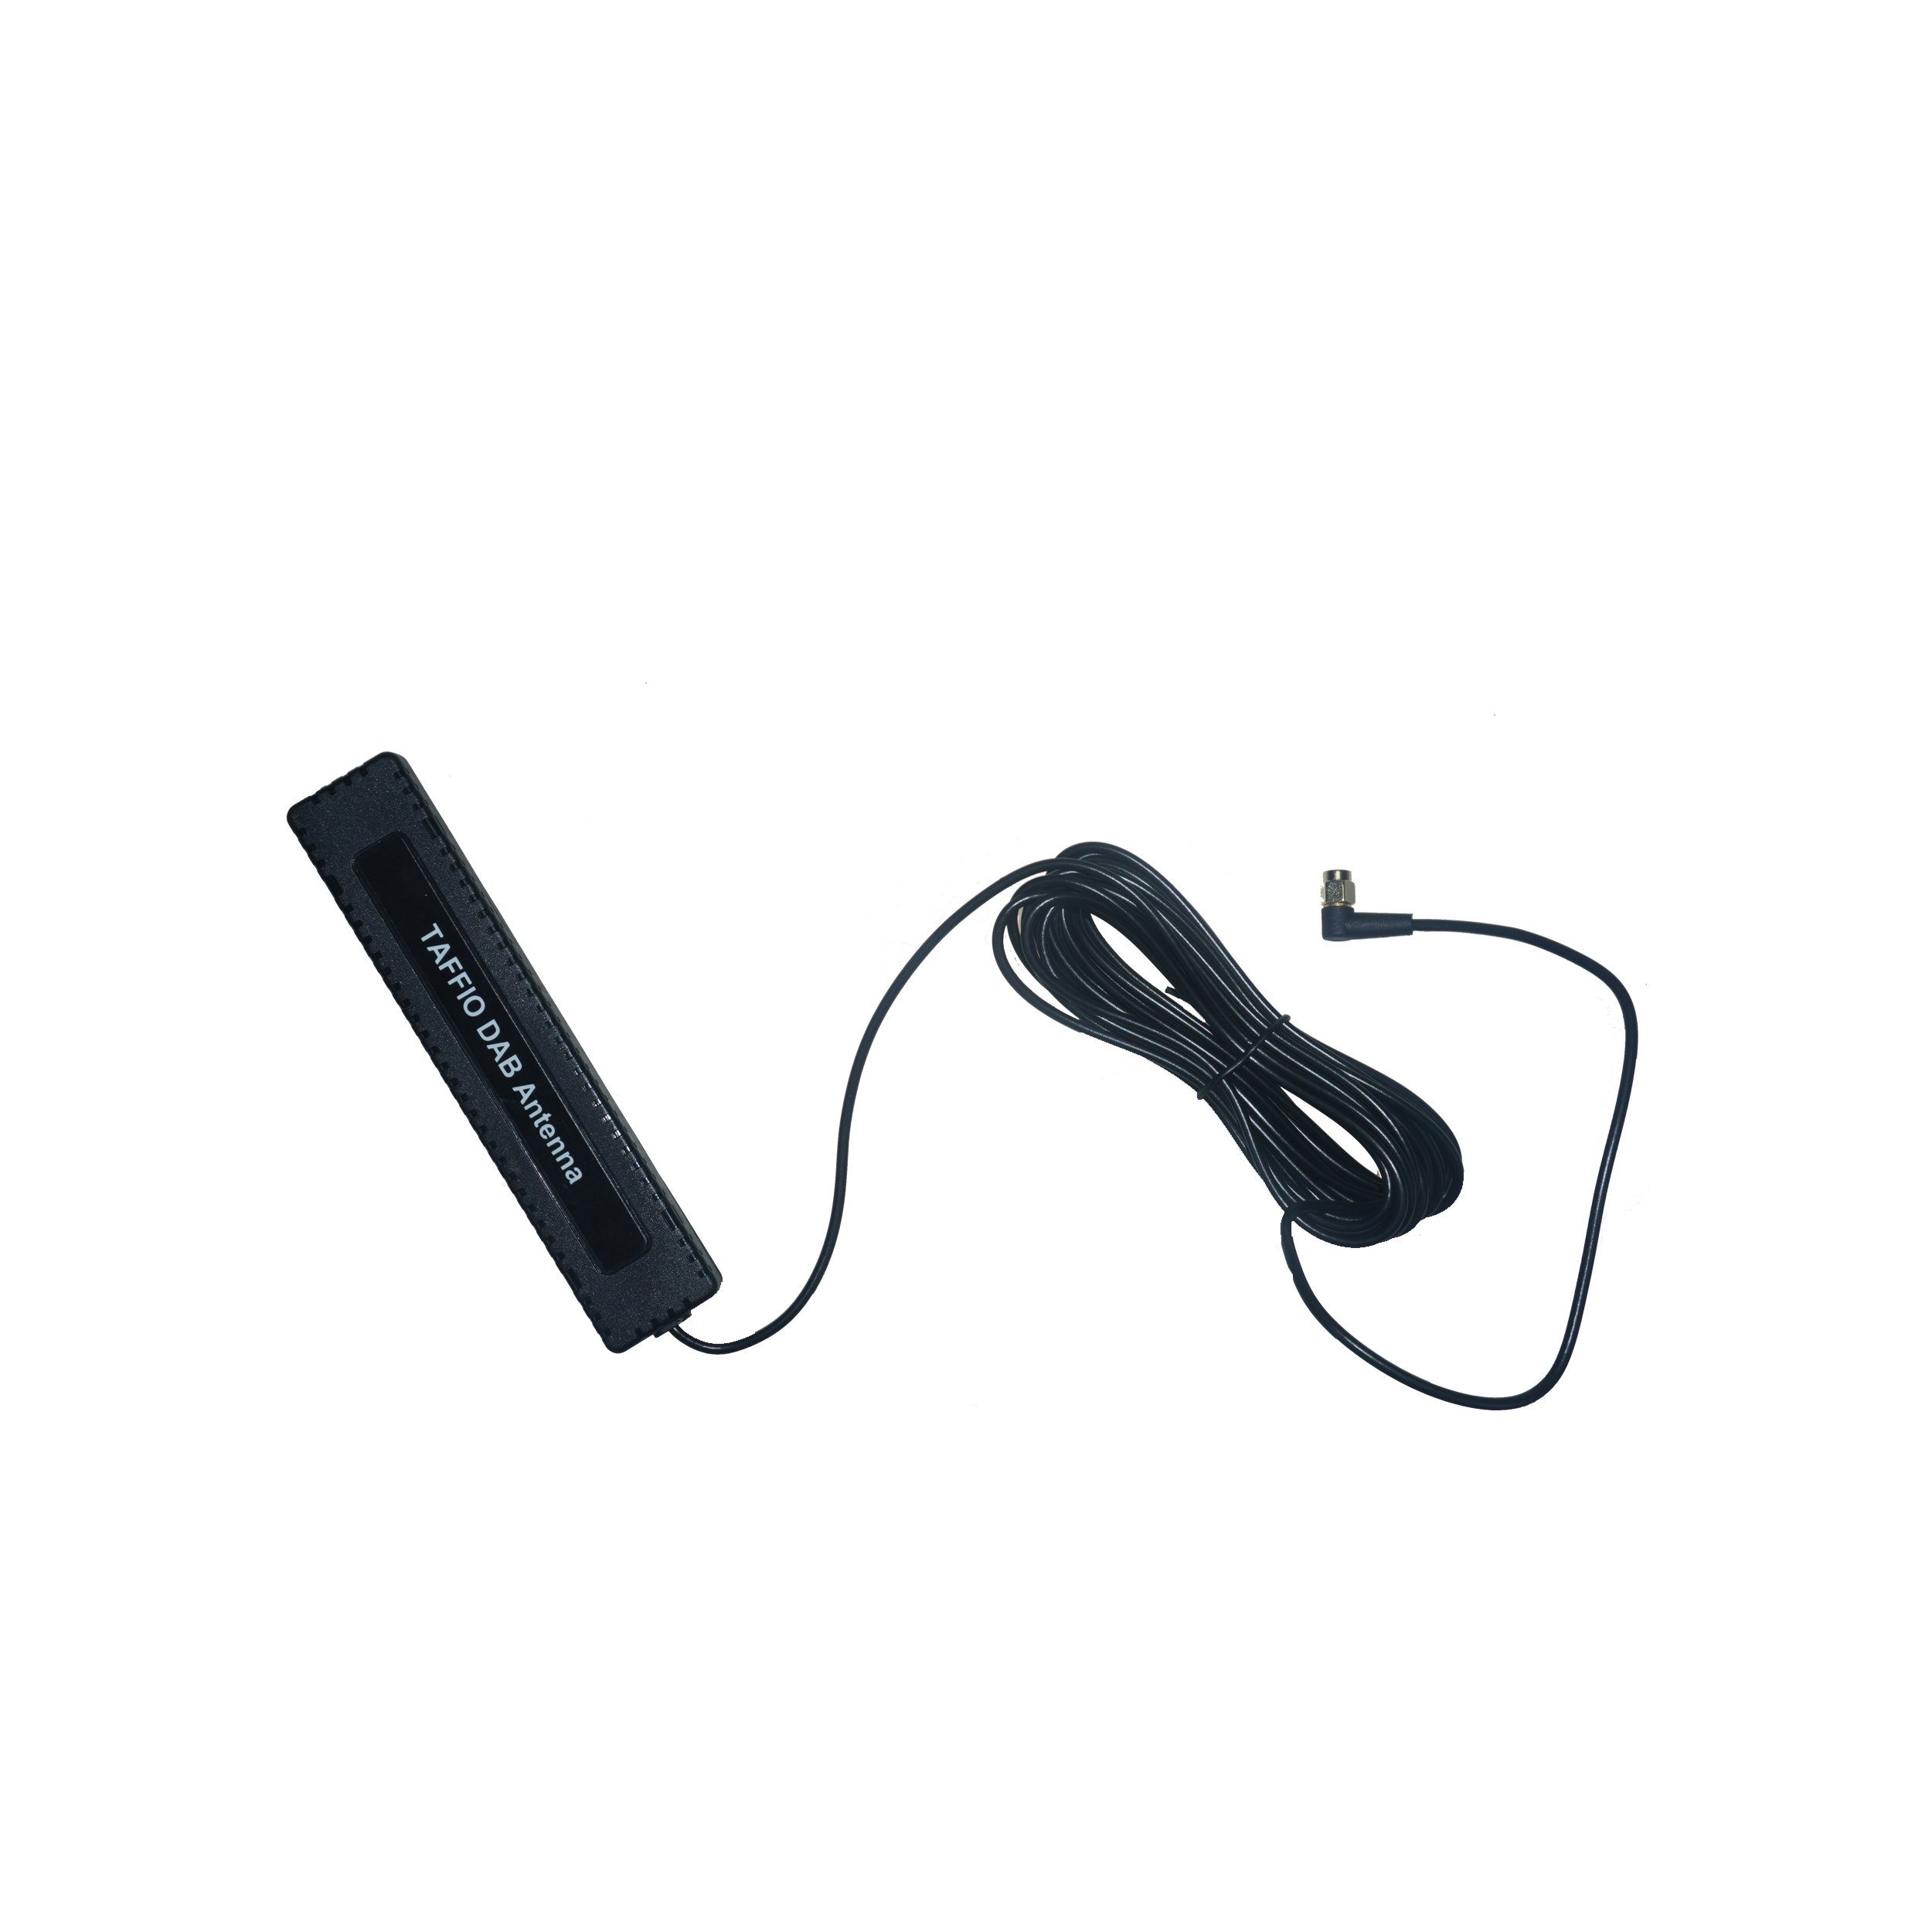 TAFFIO Universal USB DAB+Tuner/Antenne Digital Digitalradio Radios Empfänger (DAB) Radio Android